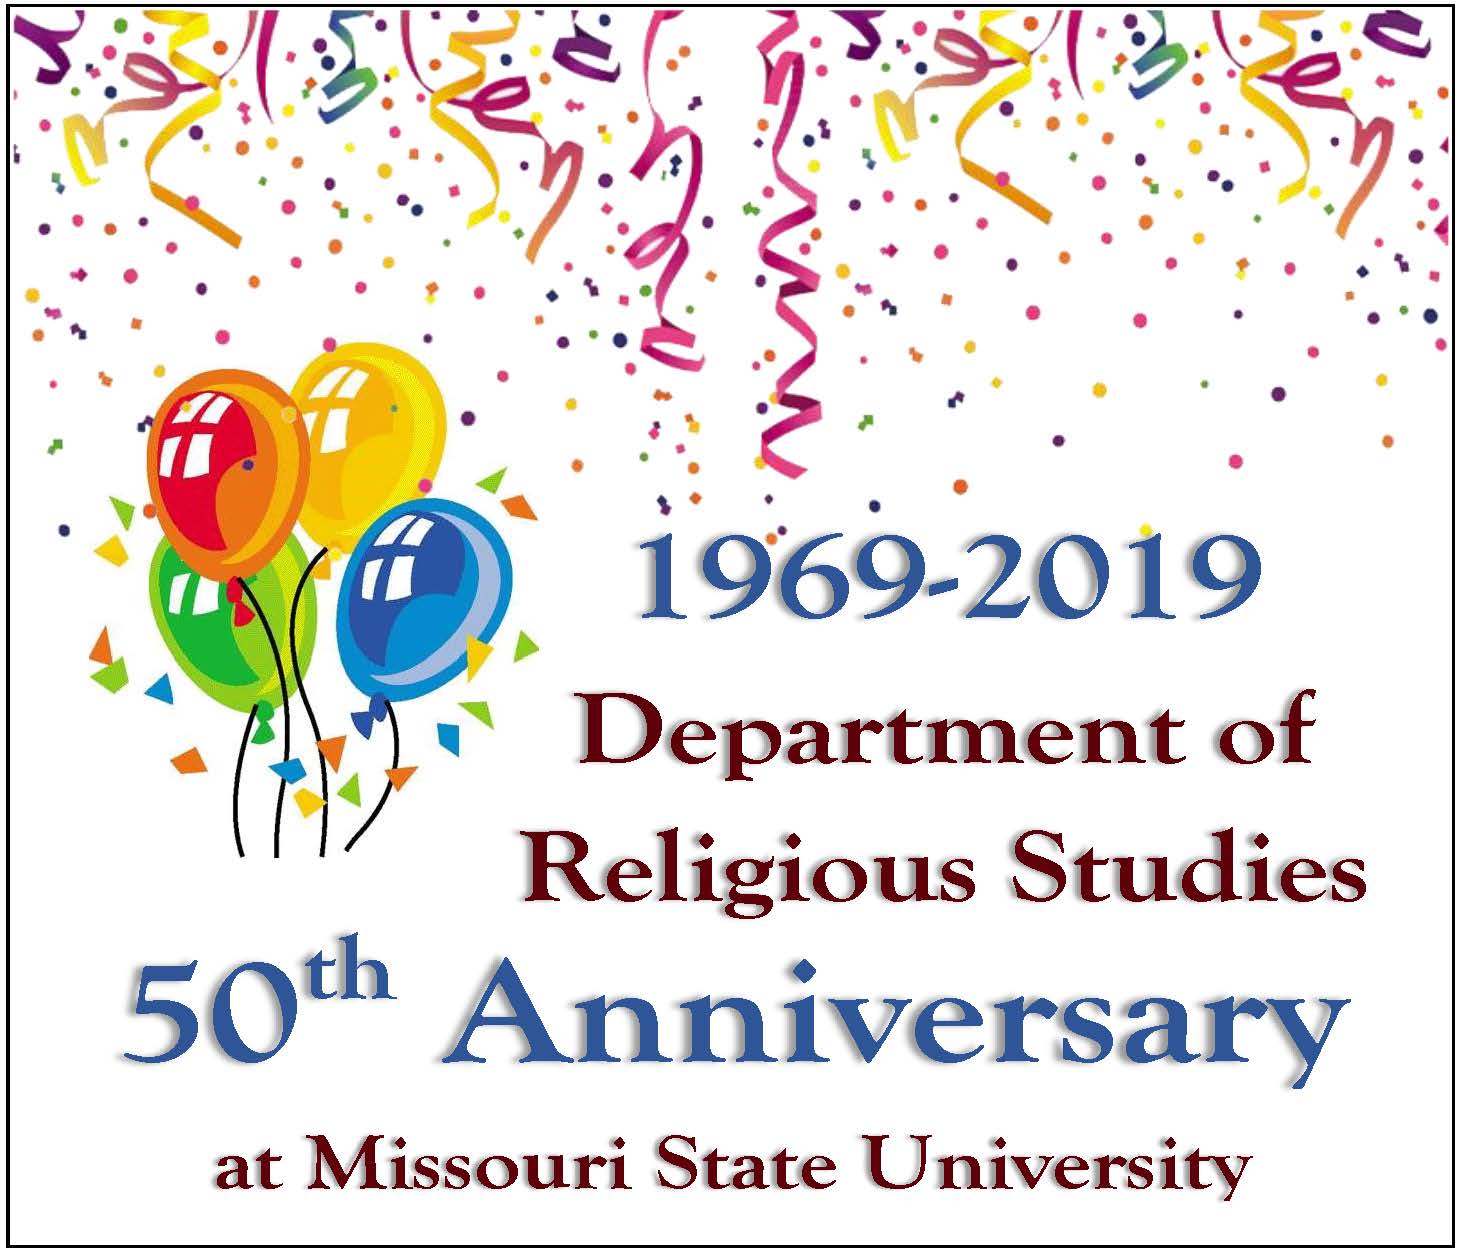 1969-2019 Department of Religious Studies 50th Anniversary at Missouri State University